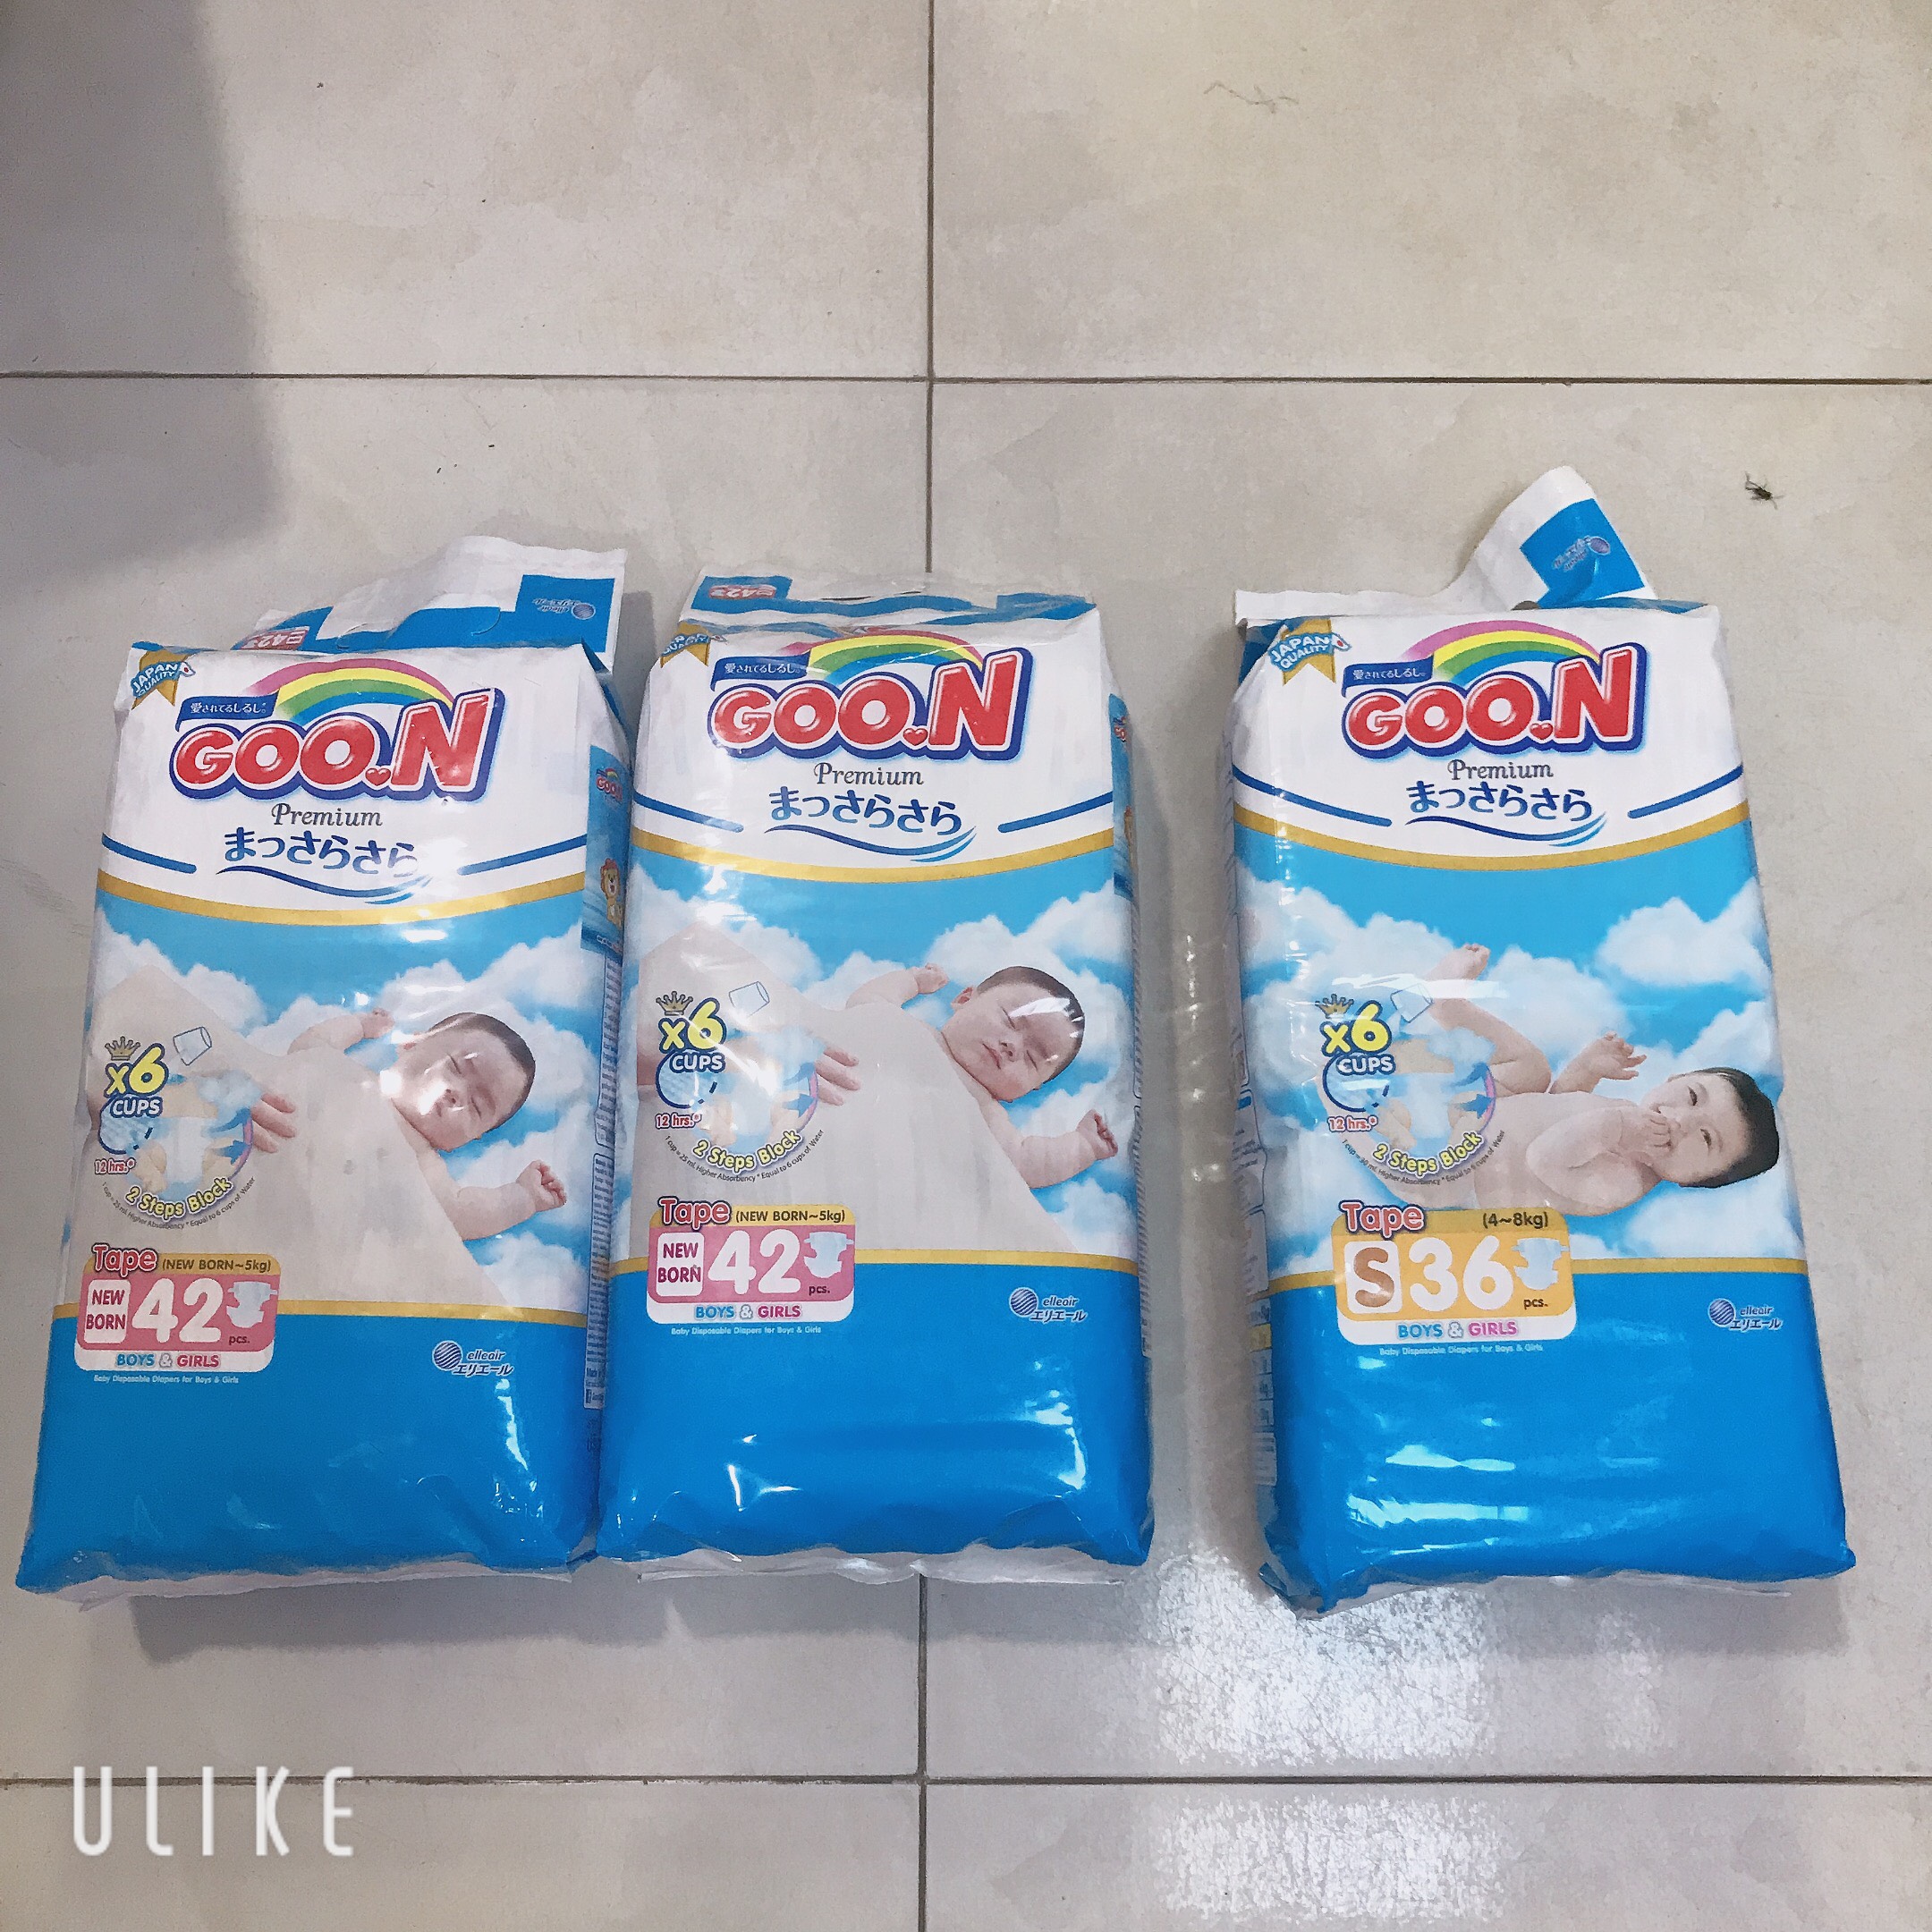 Combo 2 Tã Dán Goon premium Newborn (42 Miếng) Tặng 1 Tã Dán Goon Premium Gói Đại S36 (36Miếng)